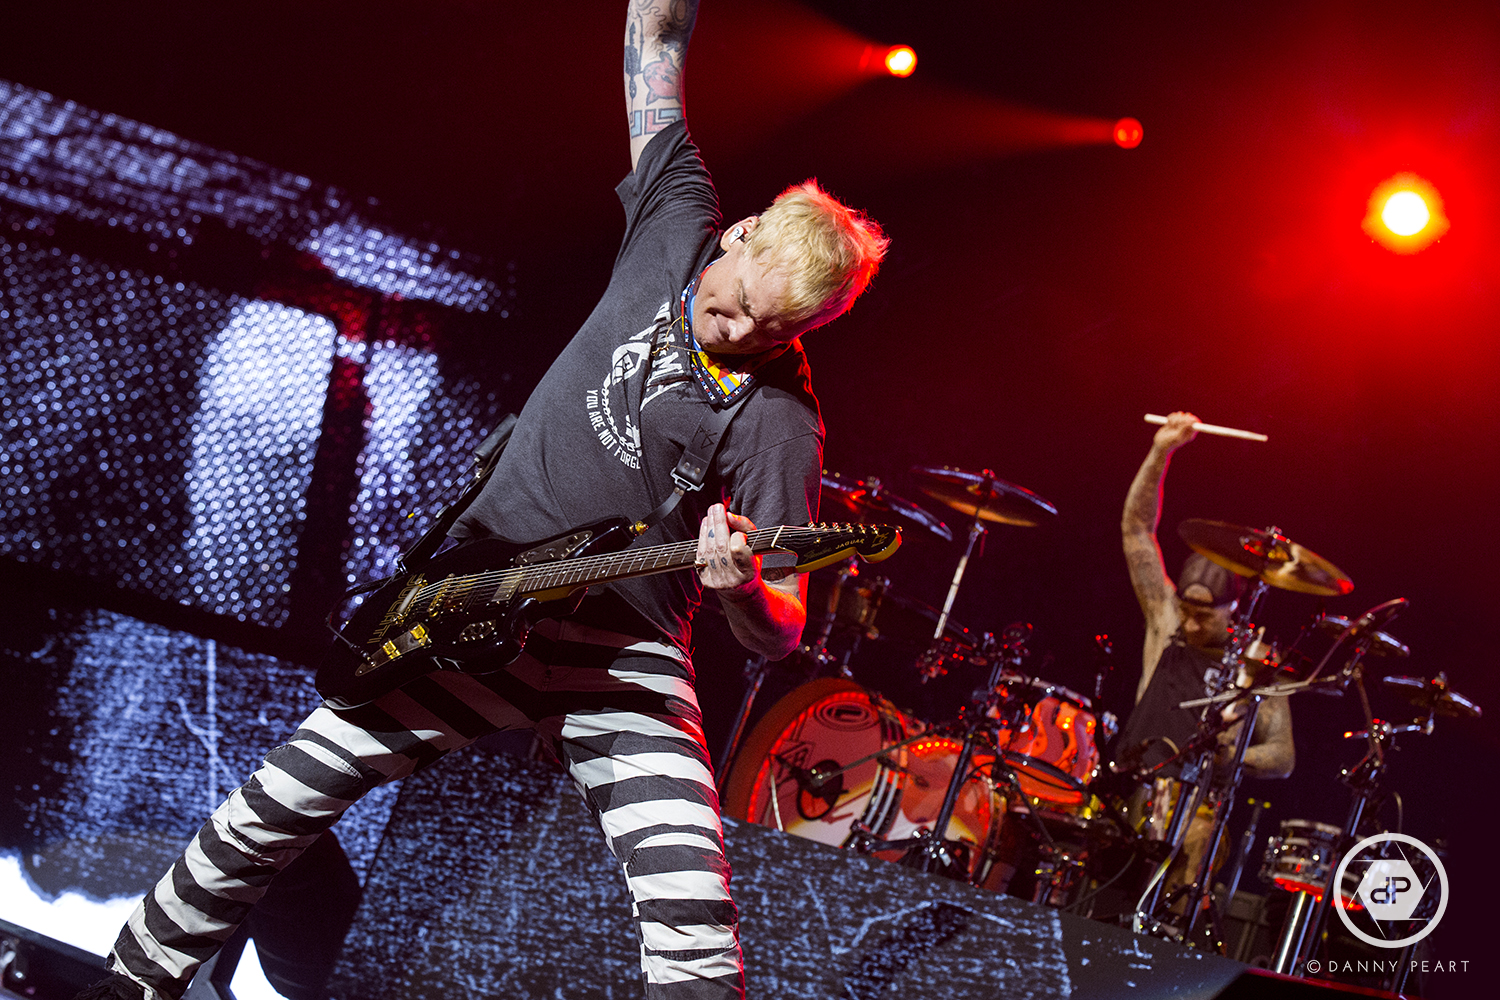 Live in Photos – Blink 182 – Leeds Arena - 05.07.17 - SOUNDCHECK - LIVE1500 x 1000